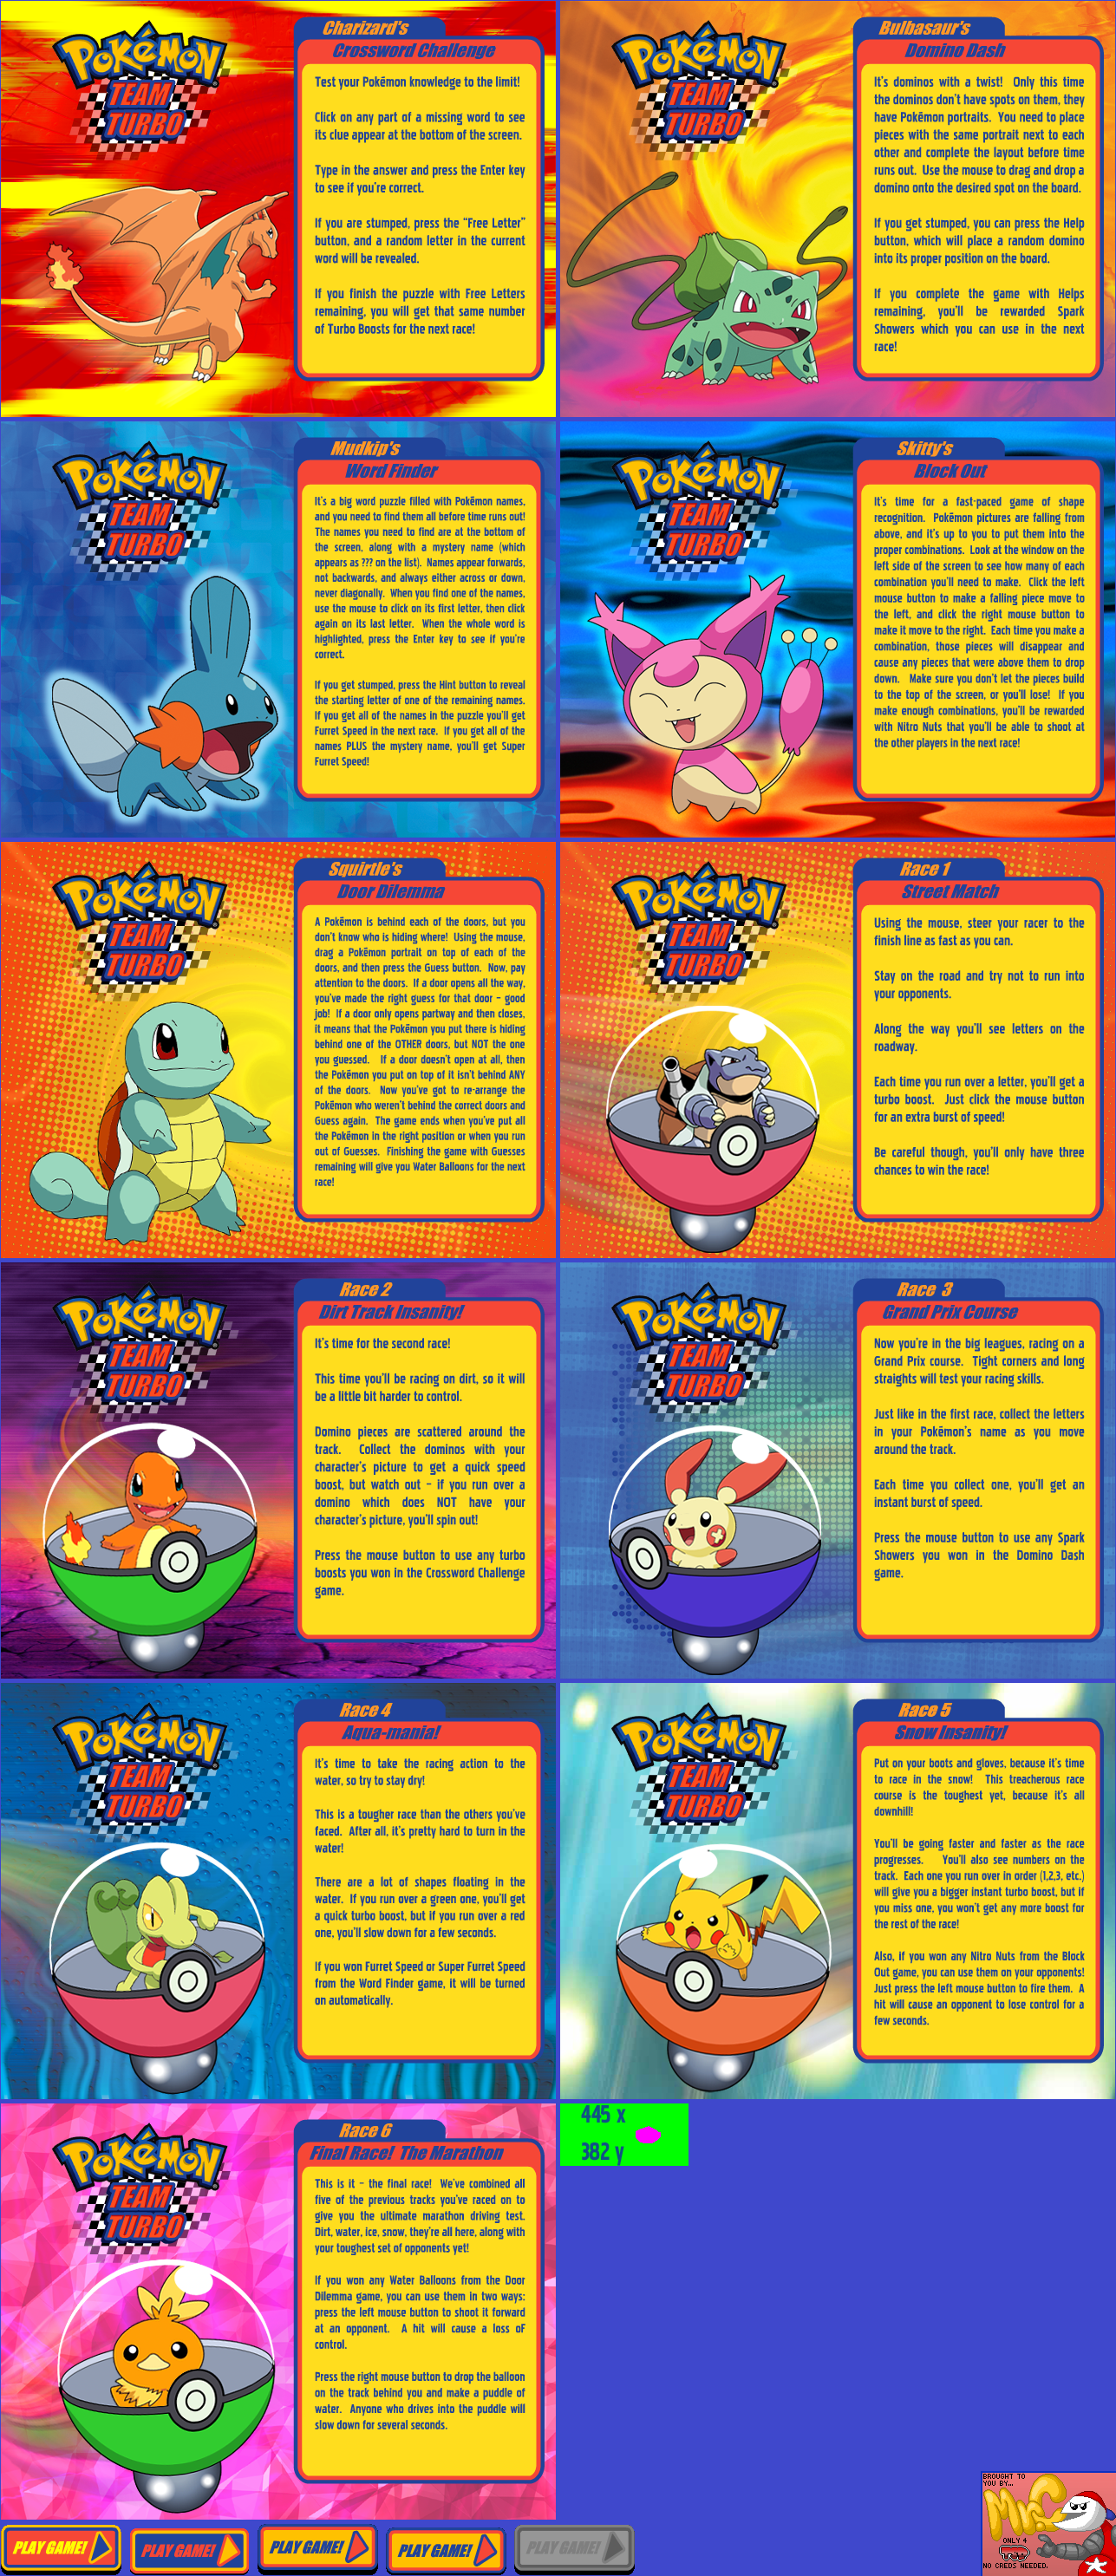 Pokémon Team Turbo - Game Instructions